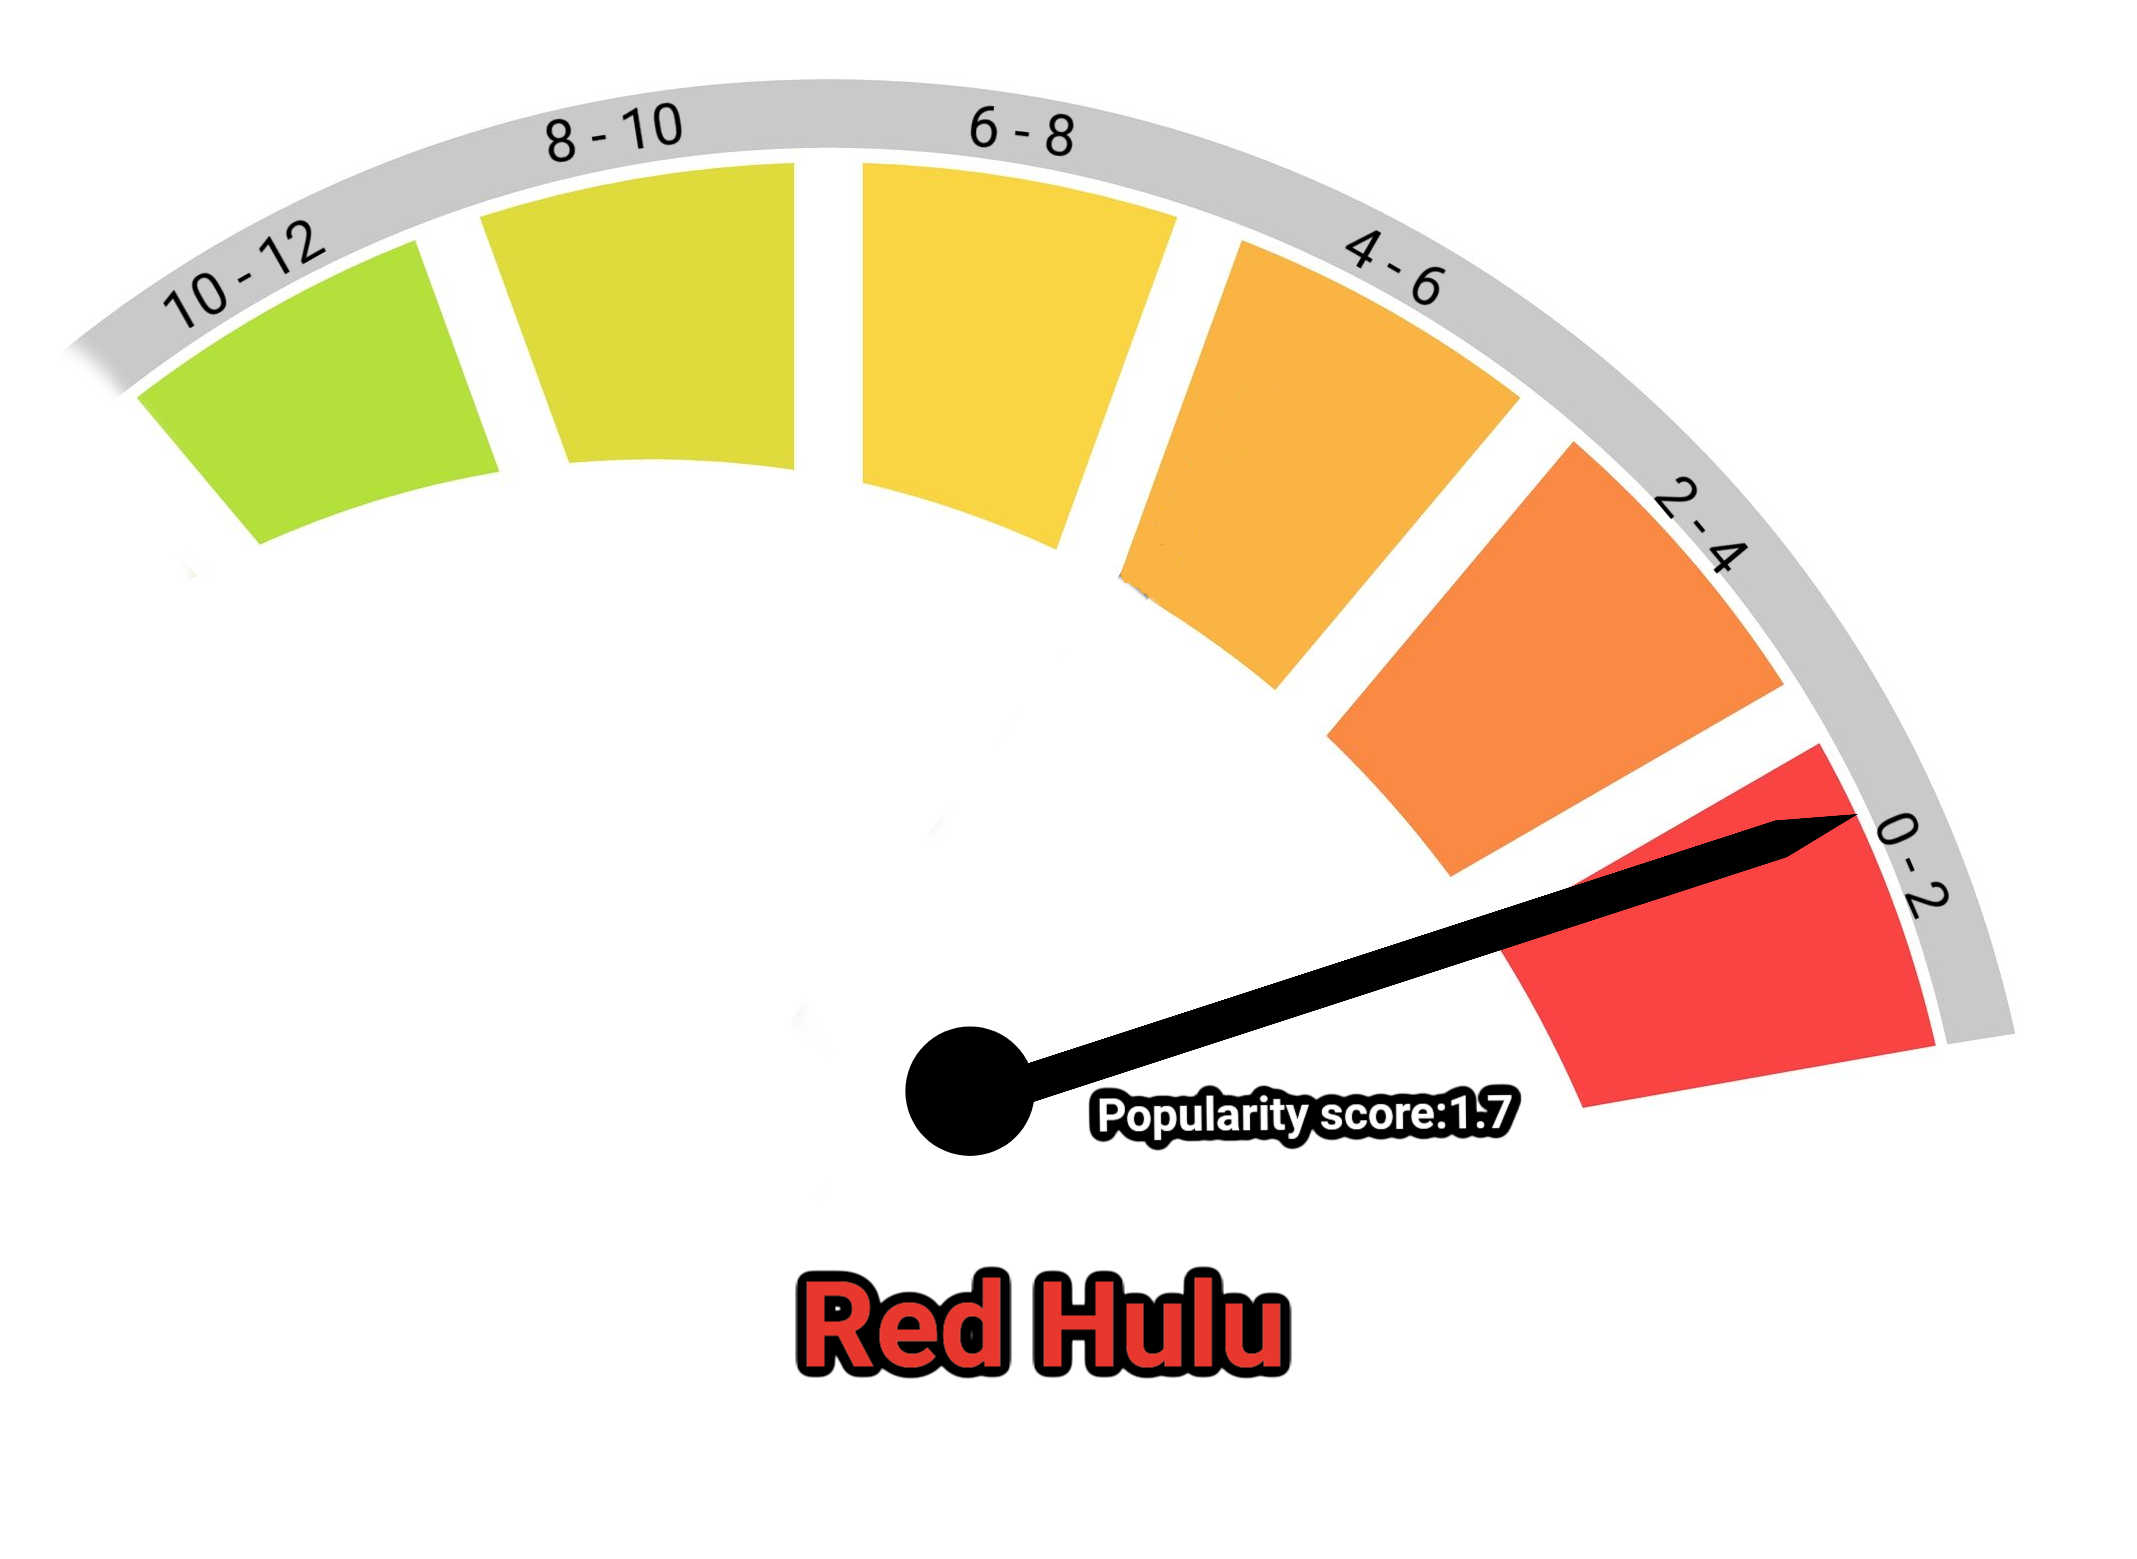 image of red hulu kratom popularity score